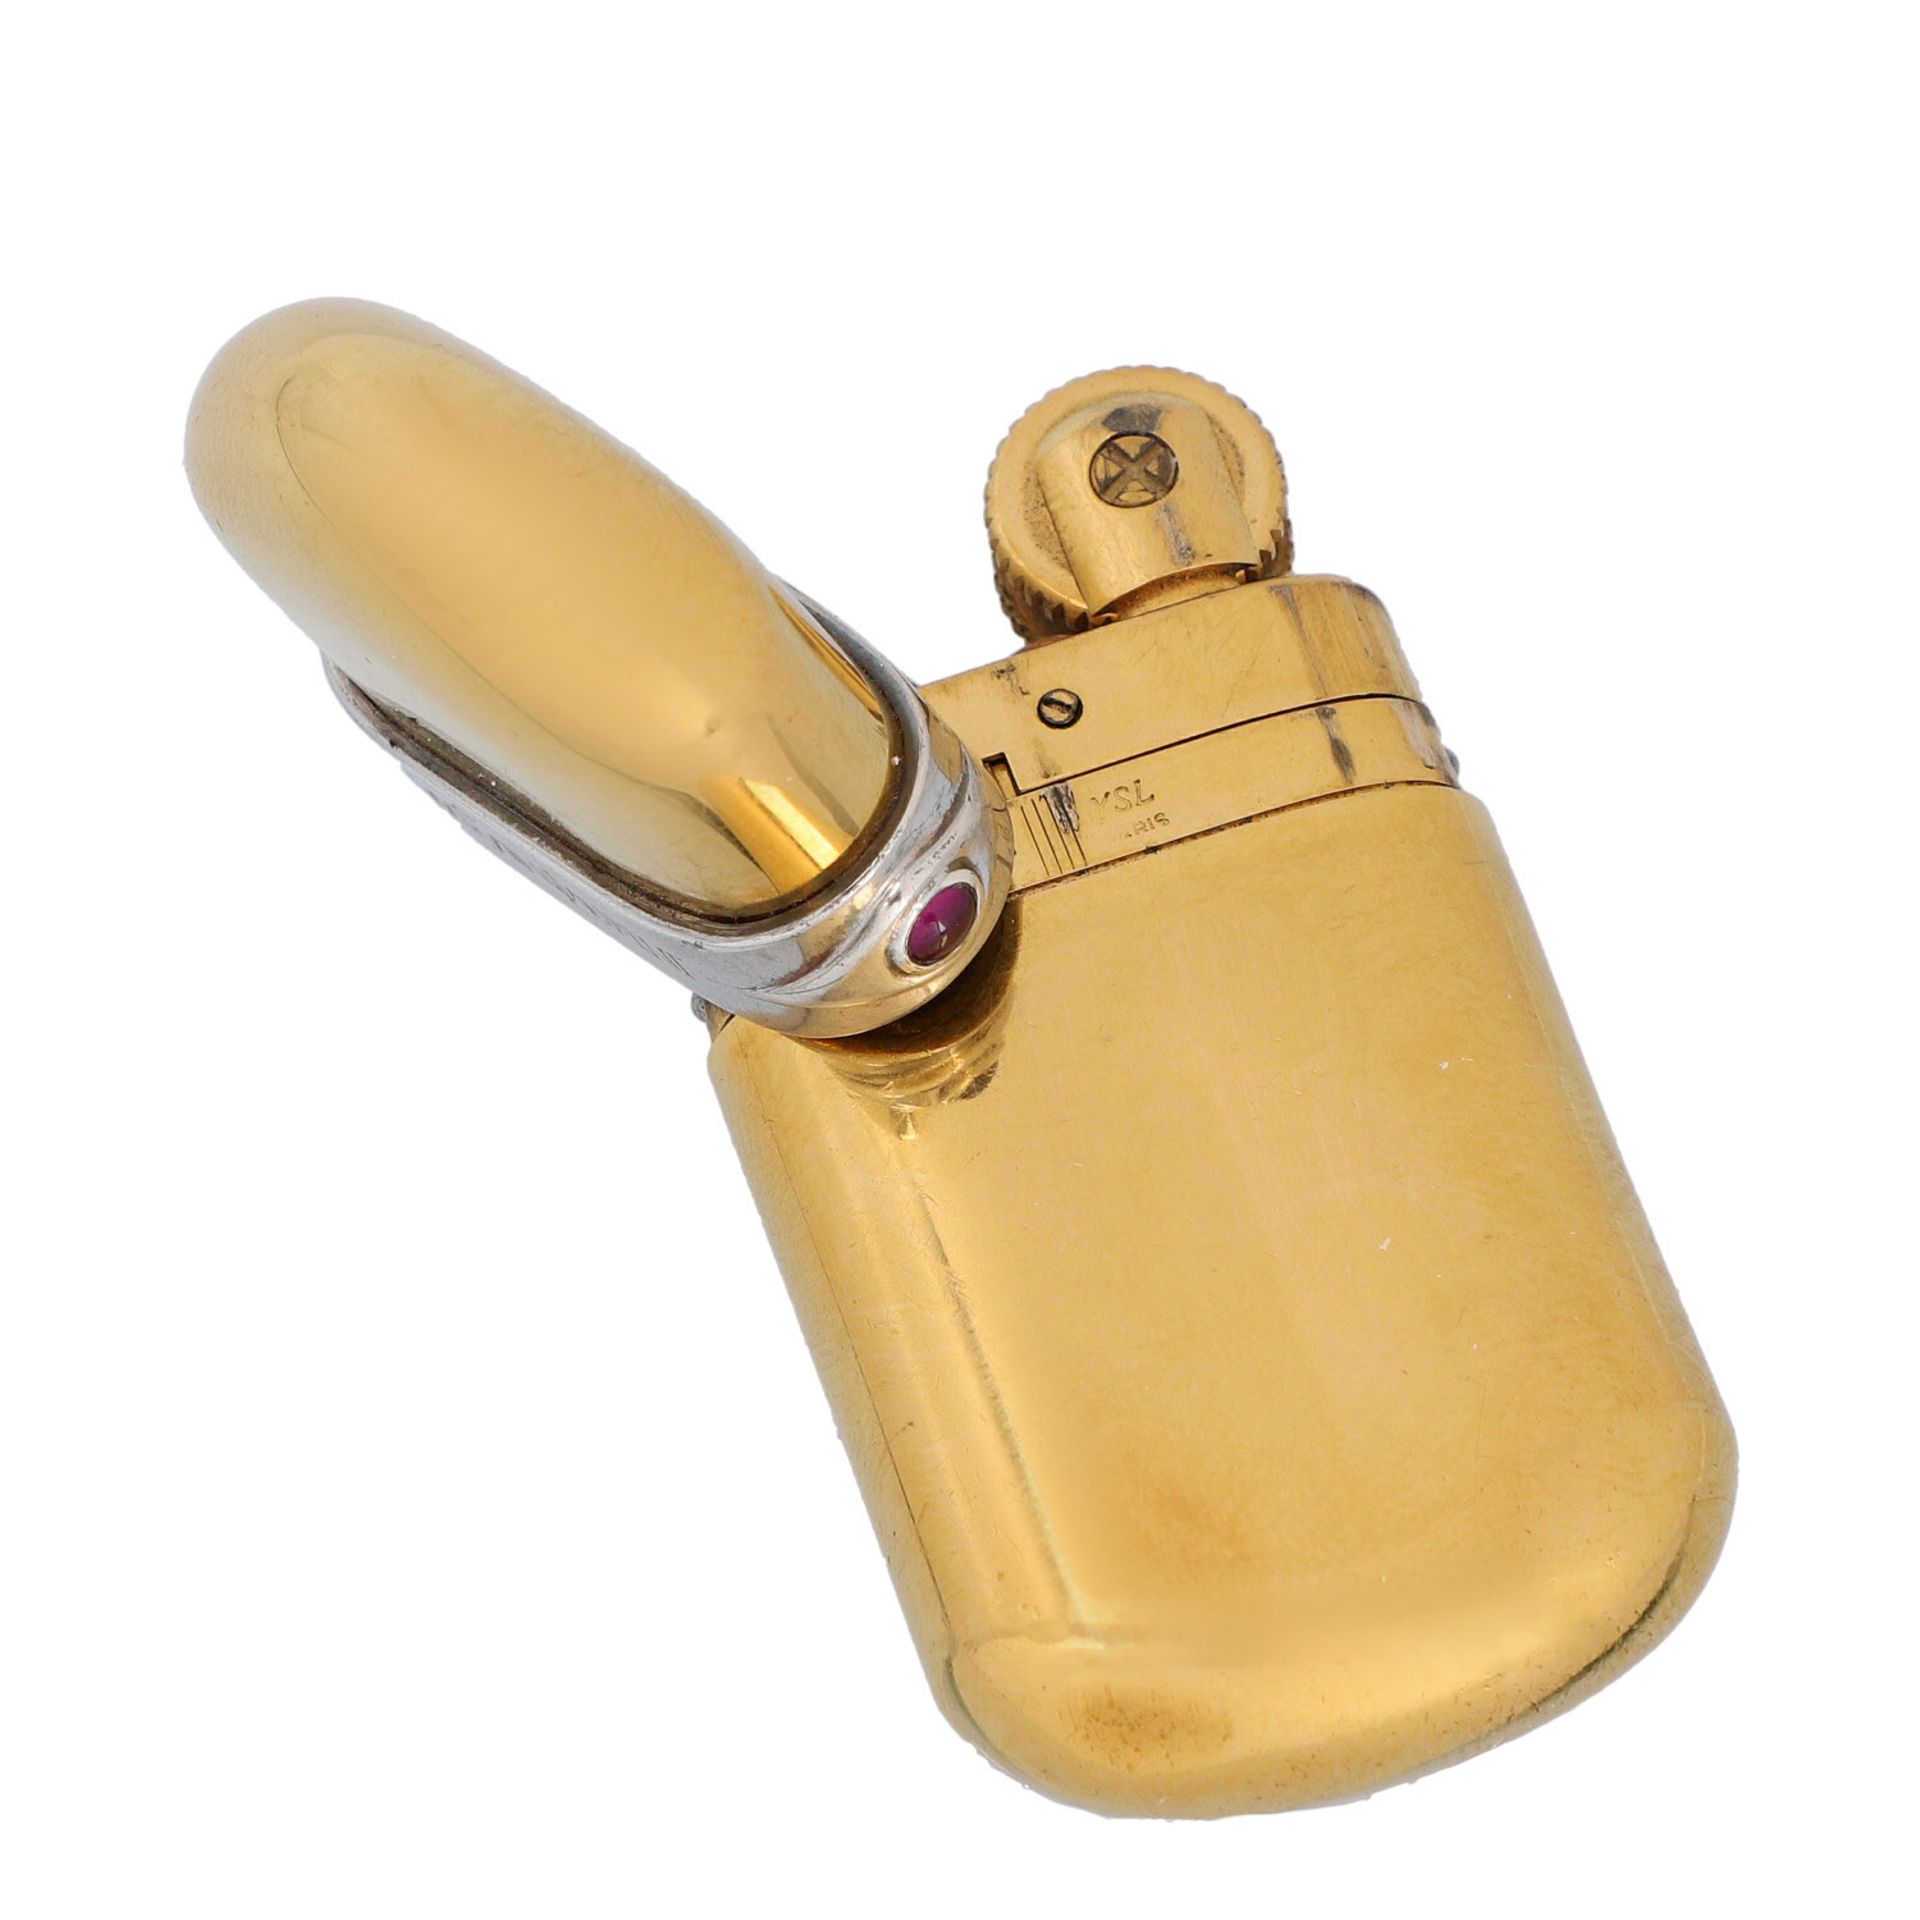 YVES SAINT LAURENT VINTAGE Feuerzeug.Goldfarbenes Modell mit silberfarbenem Logo-Detai - Image 4 of 4